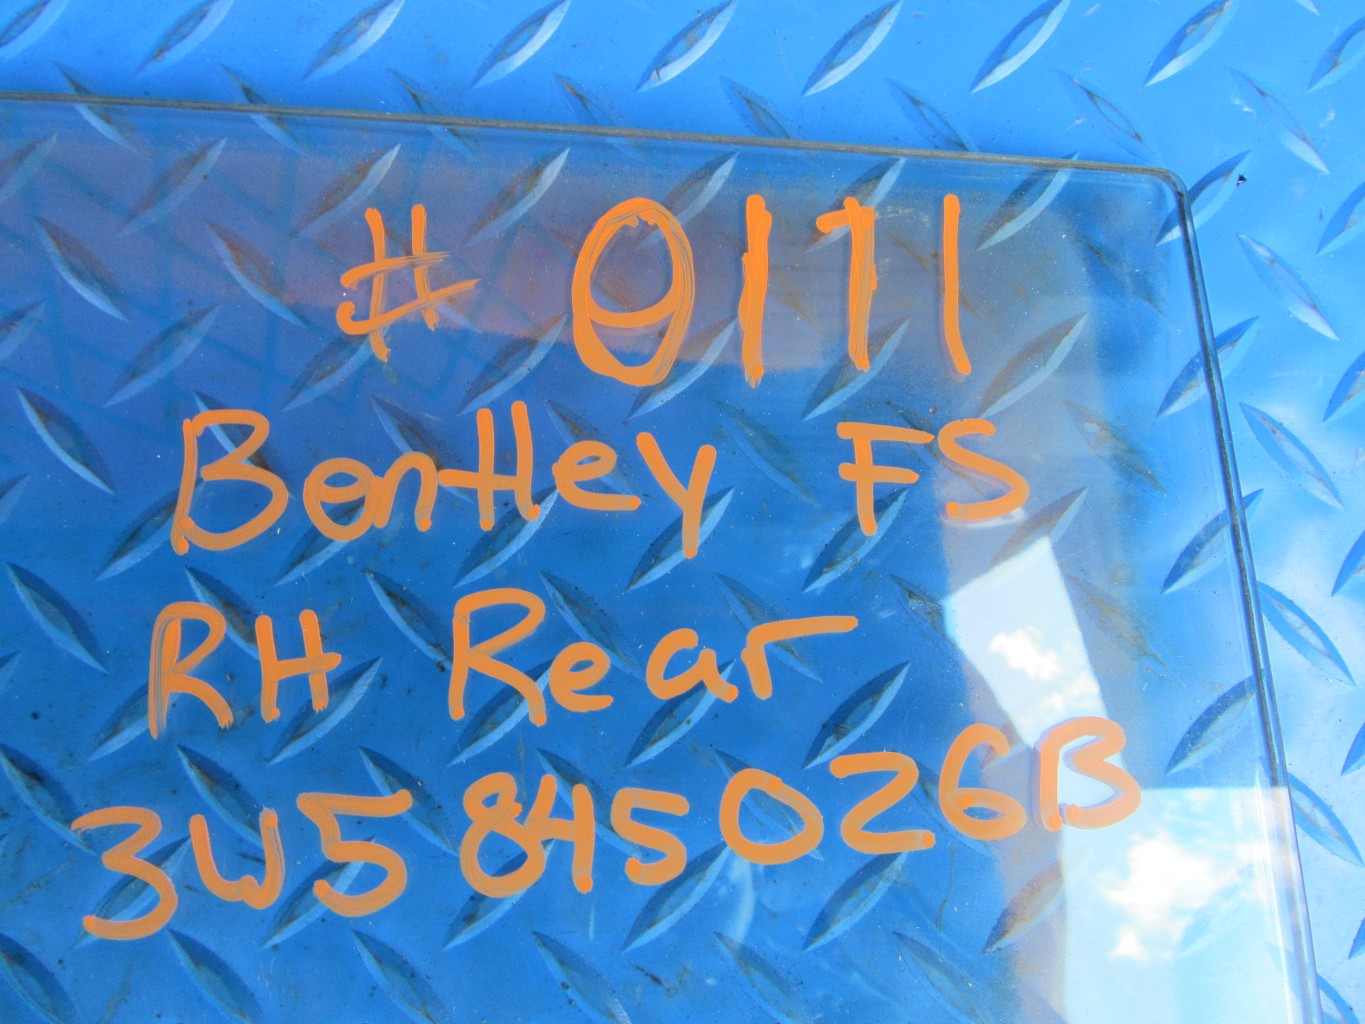 Bentley Continental Flying Spur right rear door glass #0111